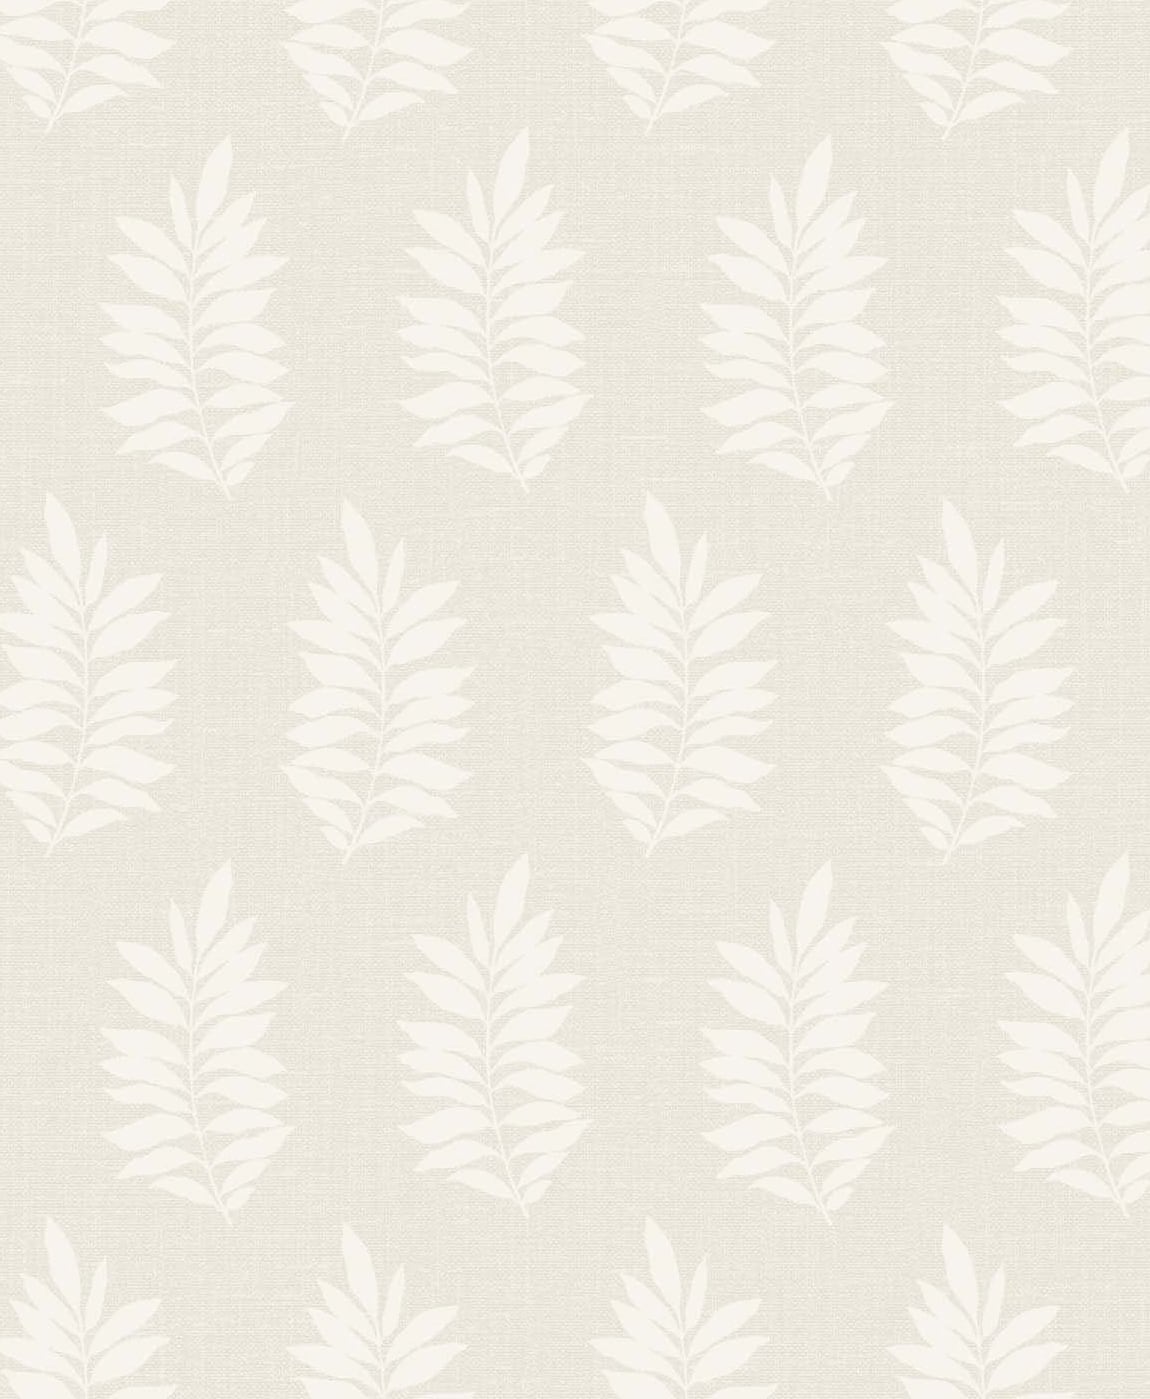 SL80303 | Pinnate Silhouette, Off-White - Seabrook Designs Wallpaper